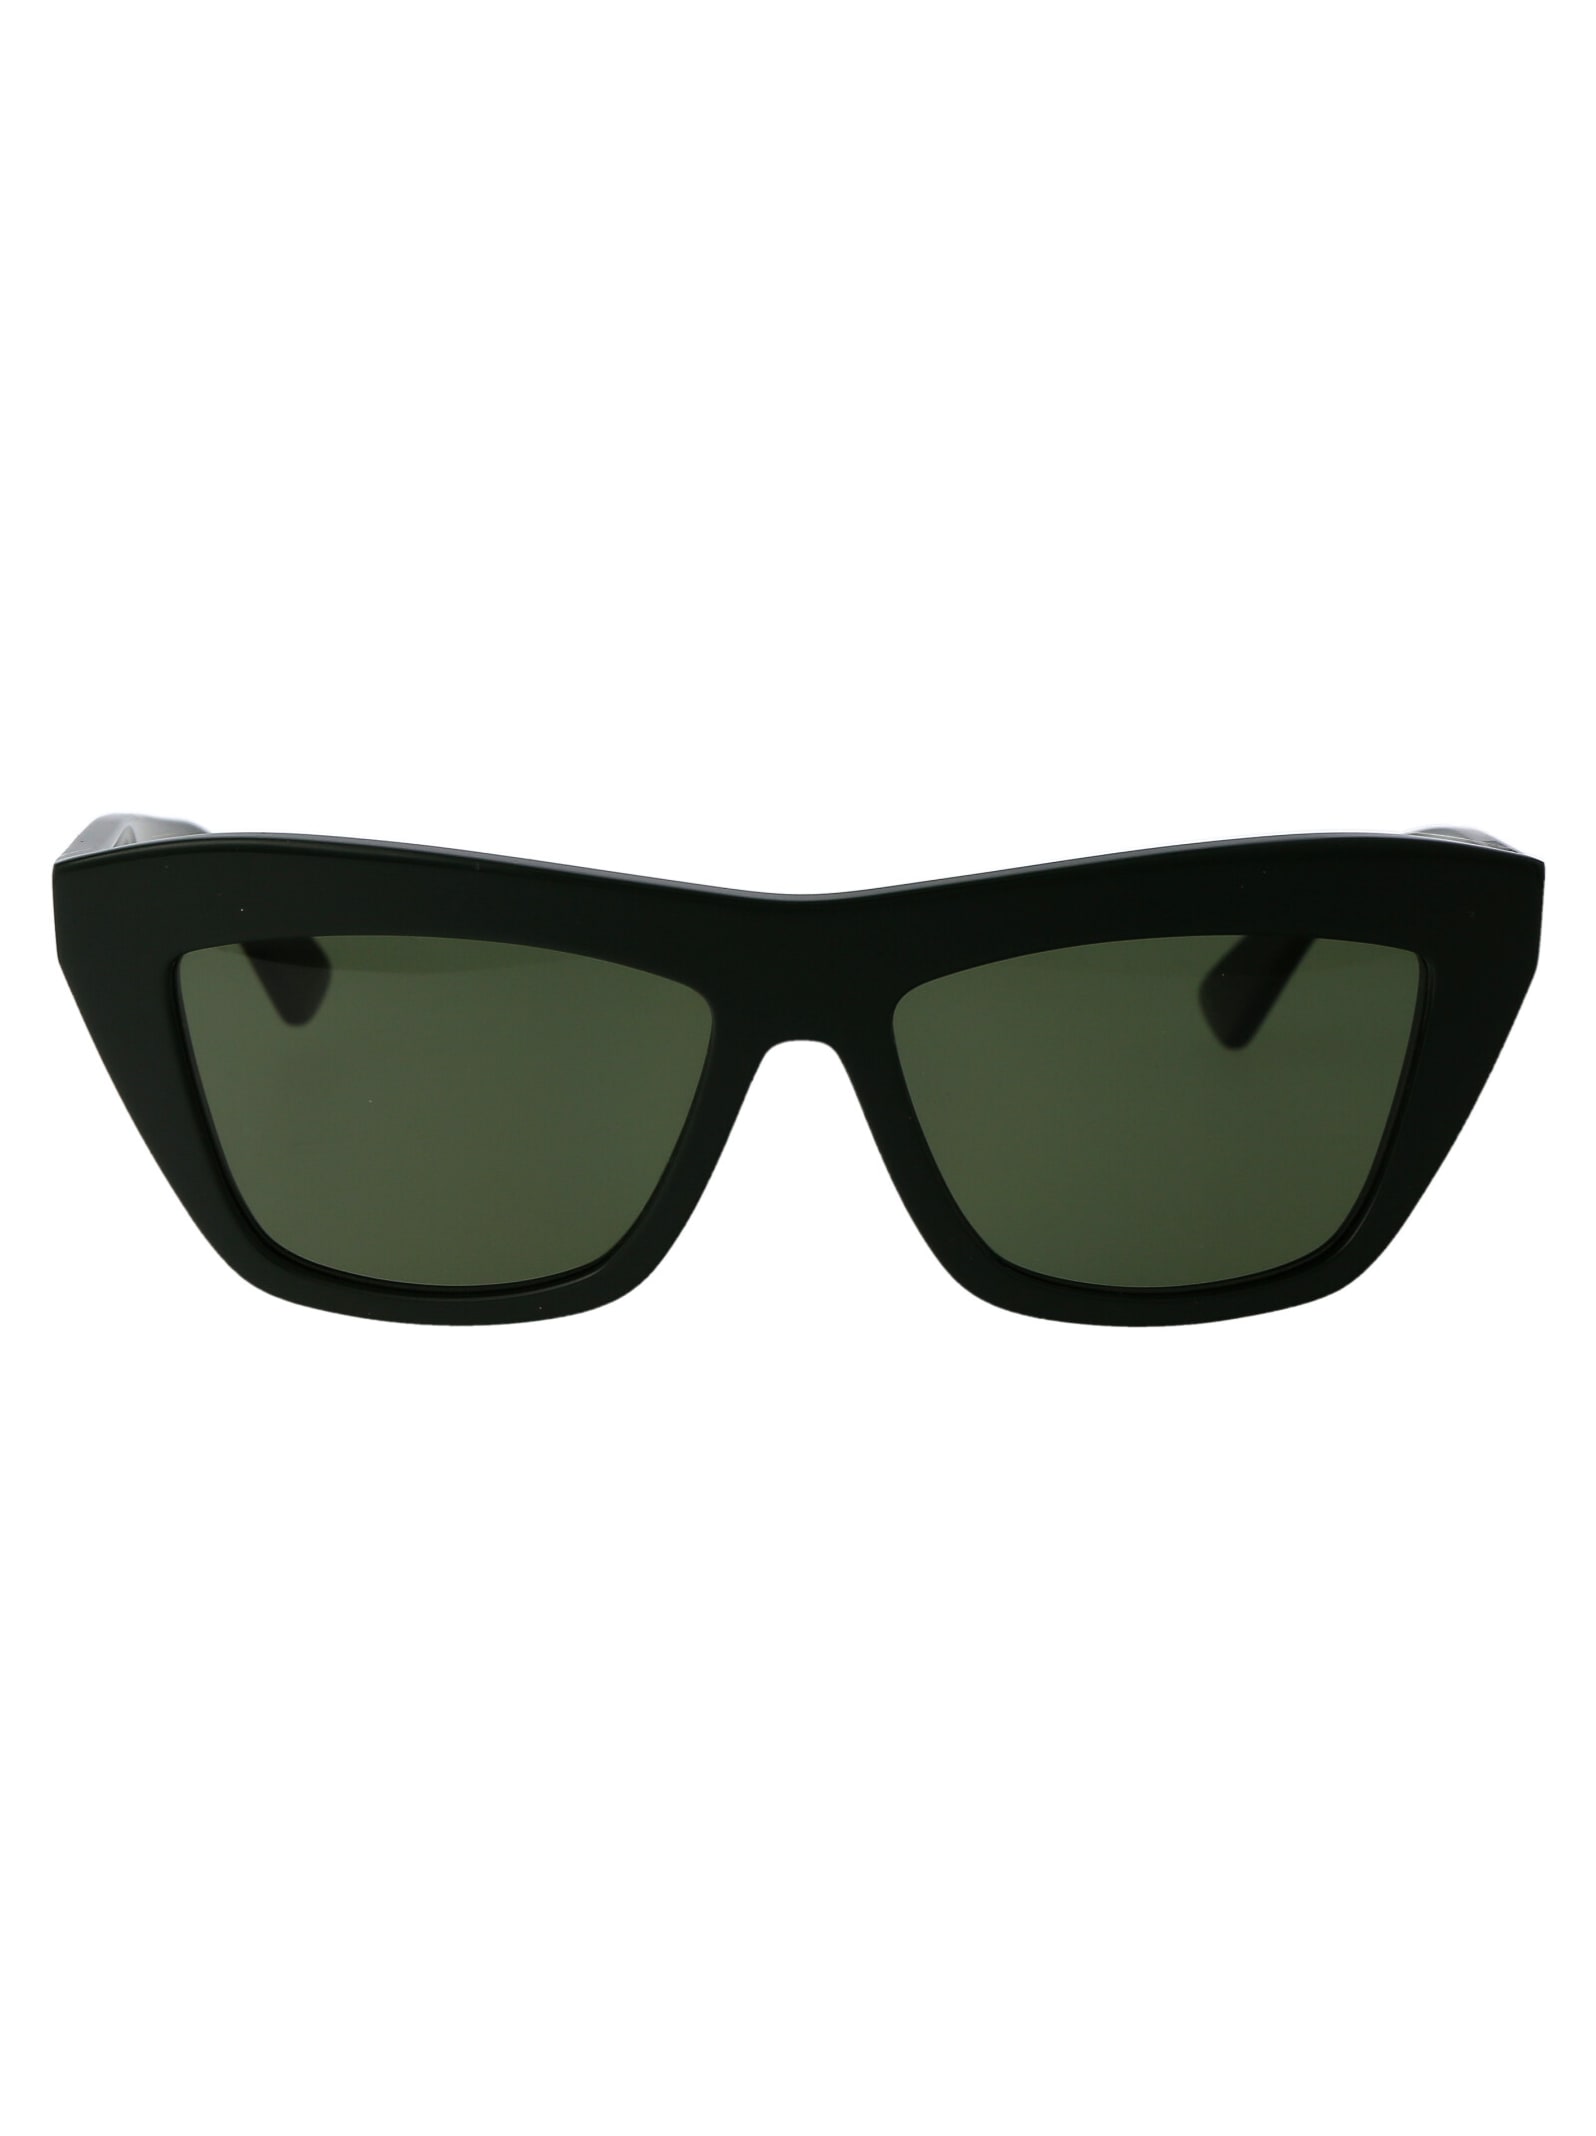 Bottega Veneta Bv1121s Sunglasses In 007 Green Green Green